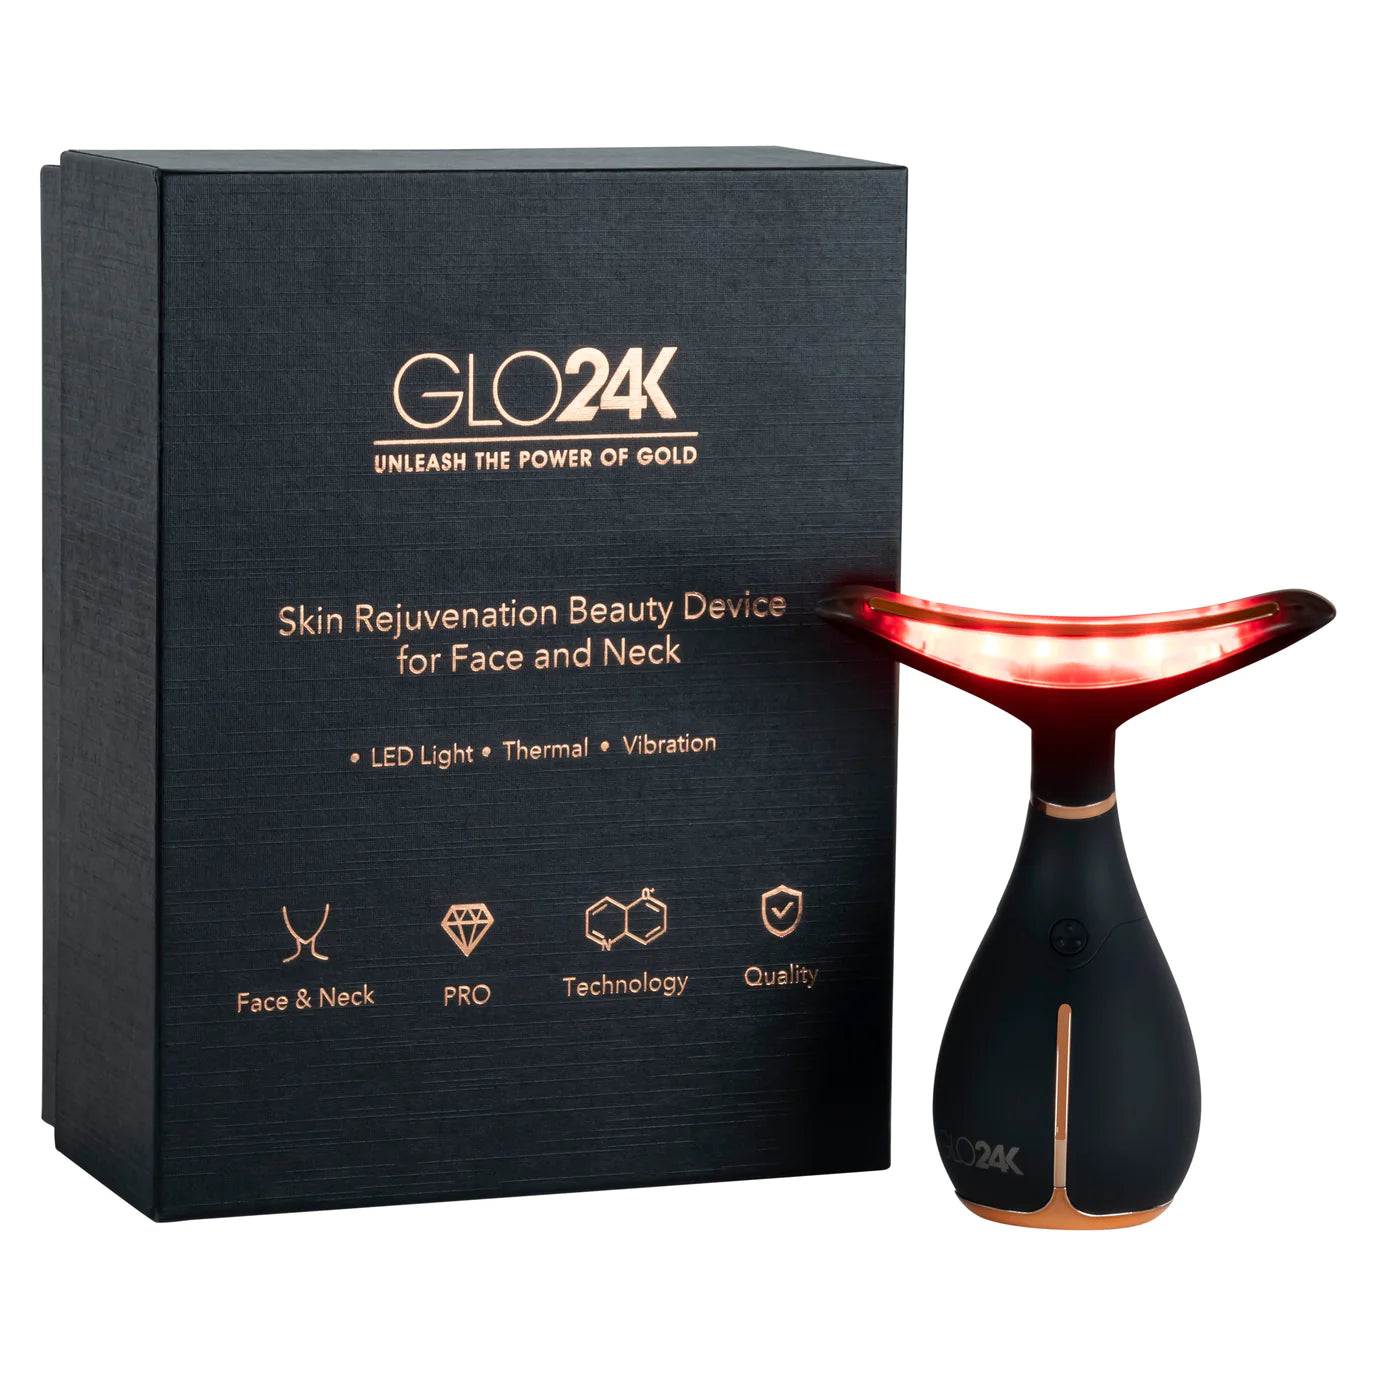 GLO24K Skin Rejuvenation Beauty Device, with packaging